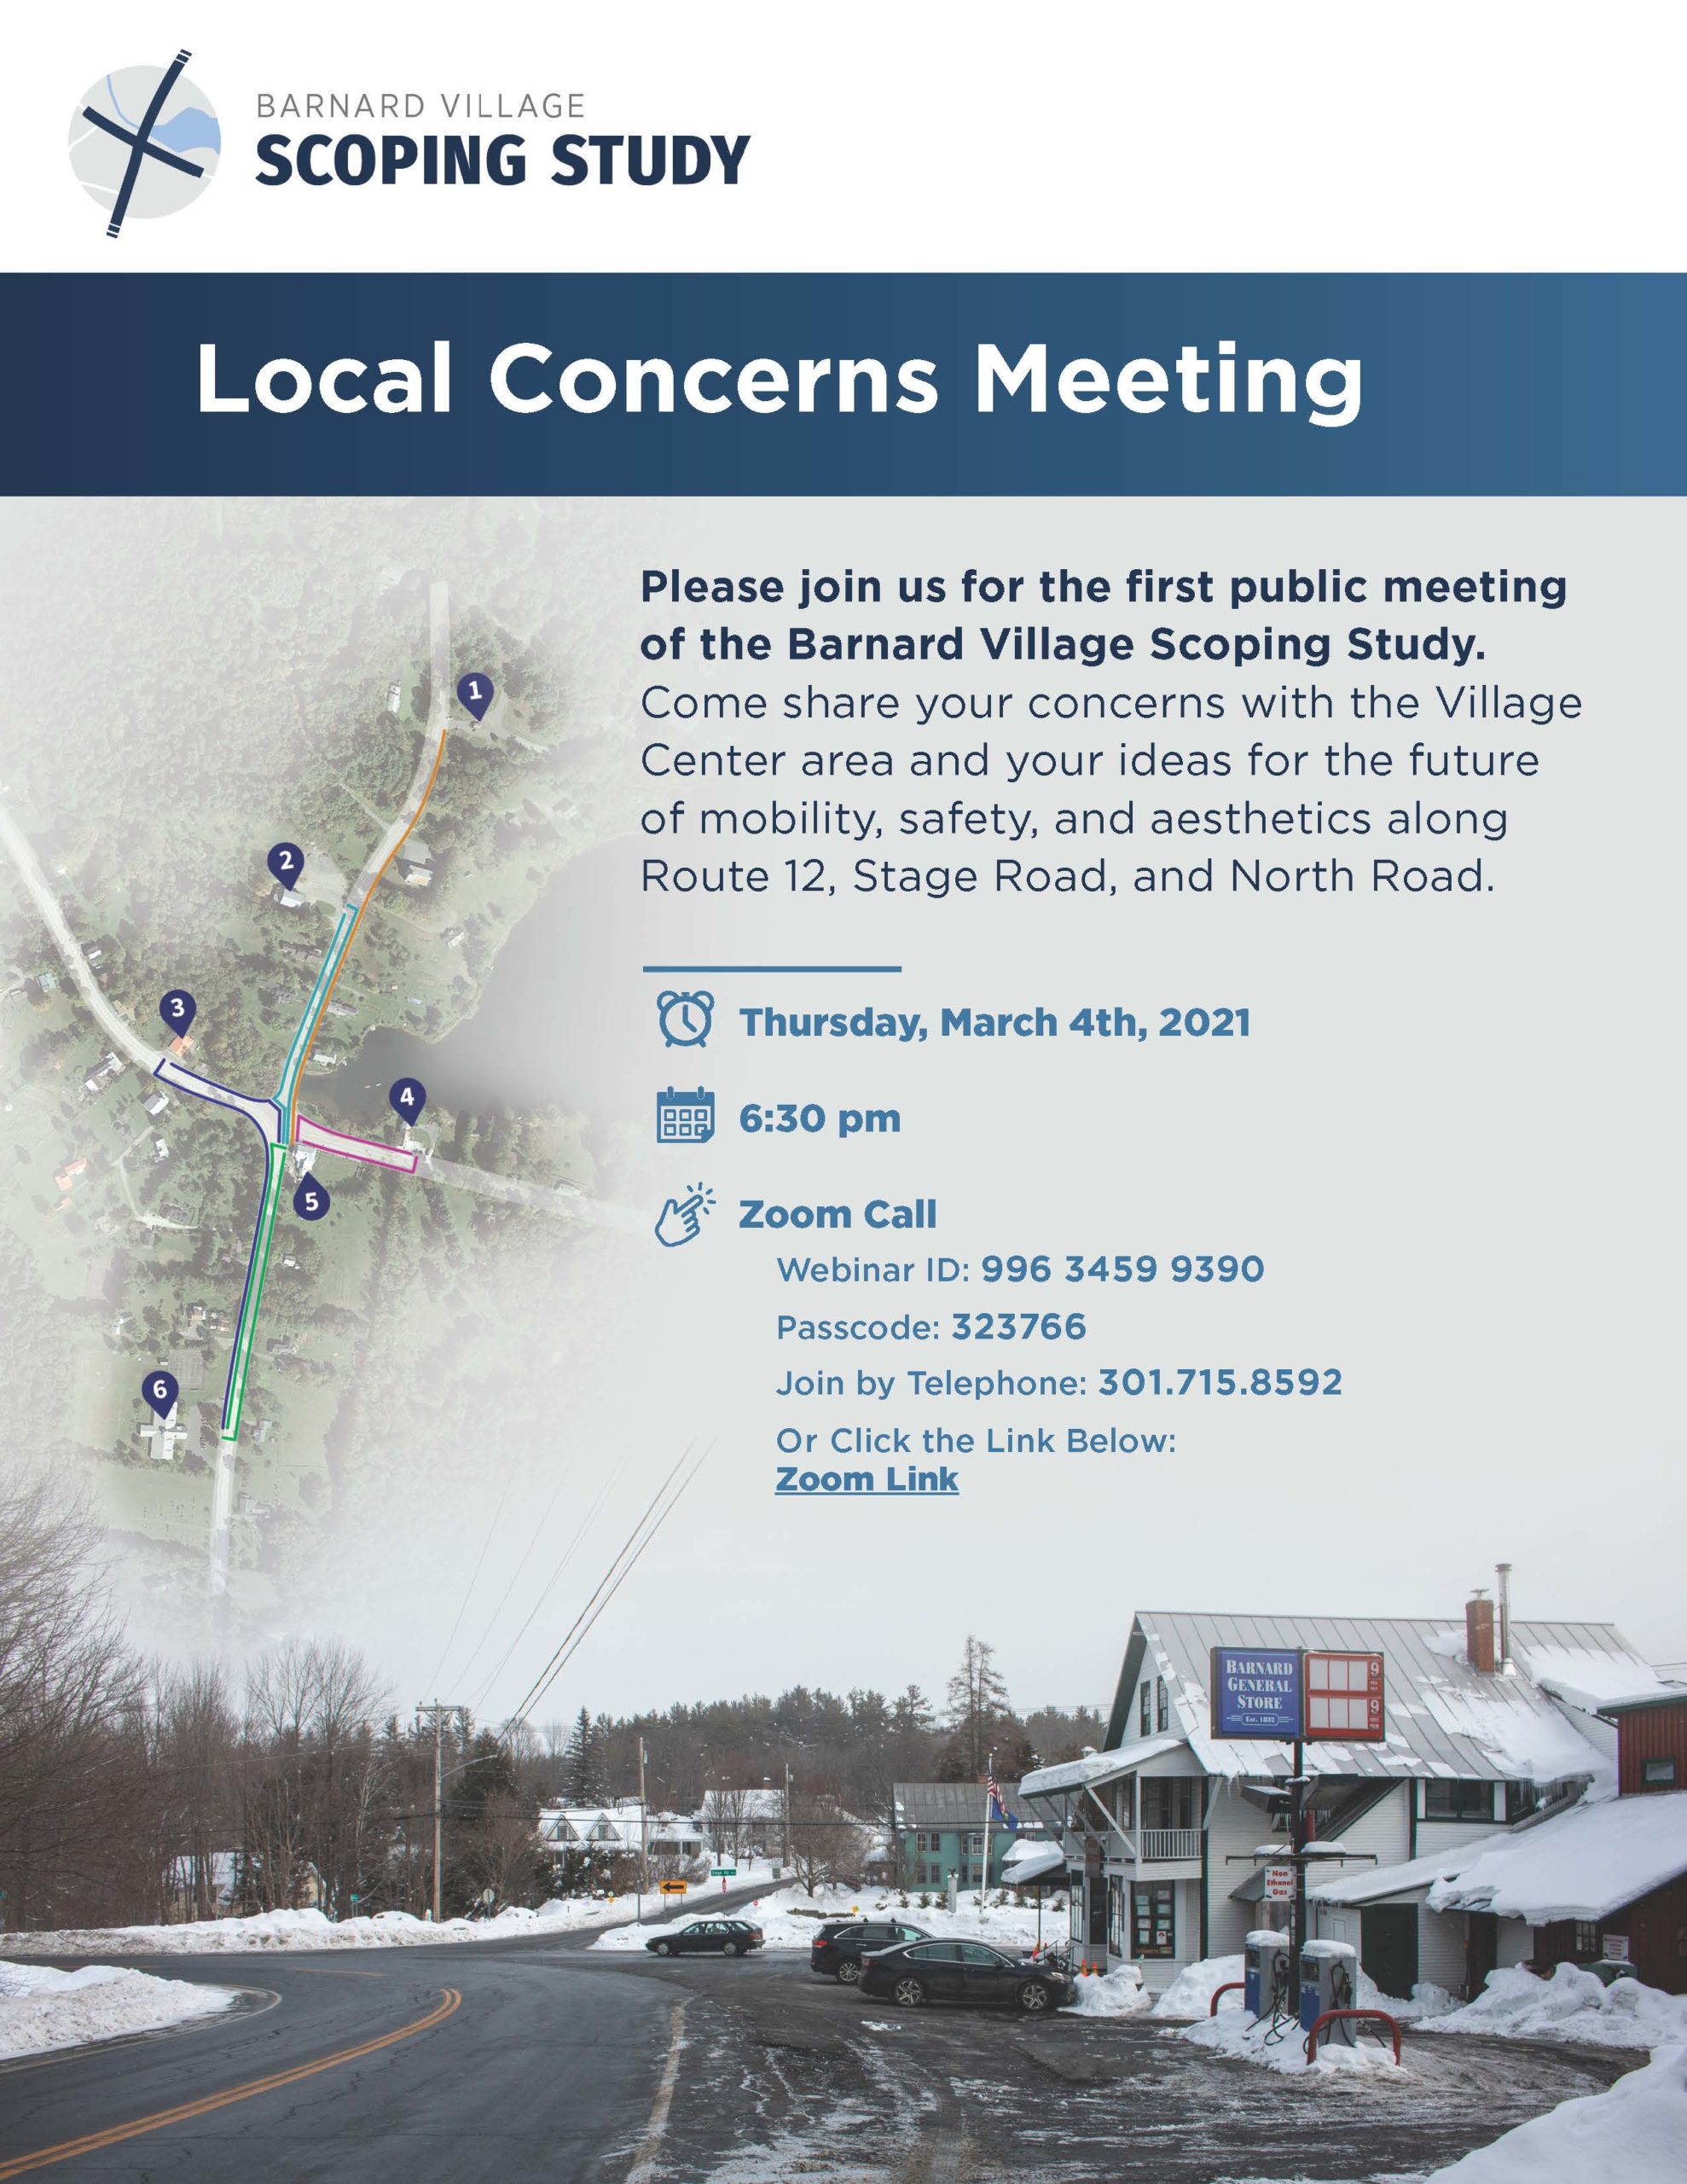 Barnard Village Scoping Study - Local Concerns Meeting